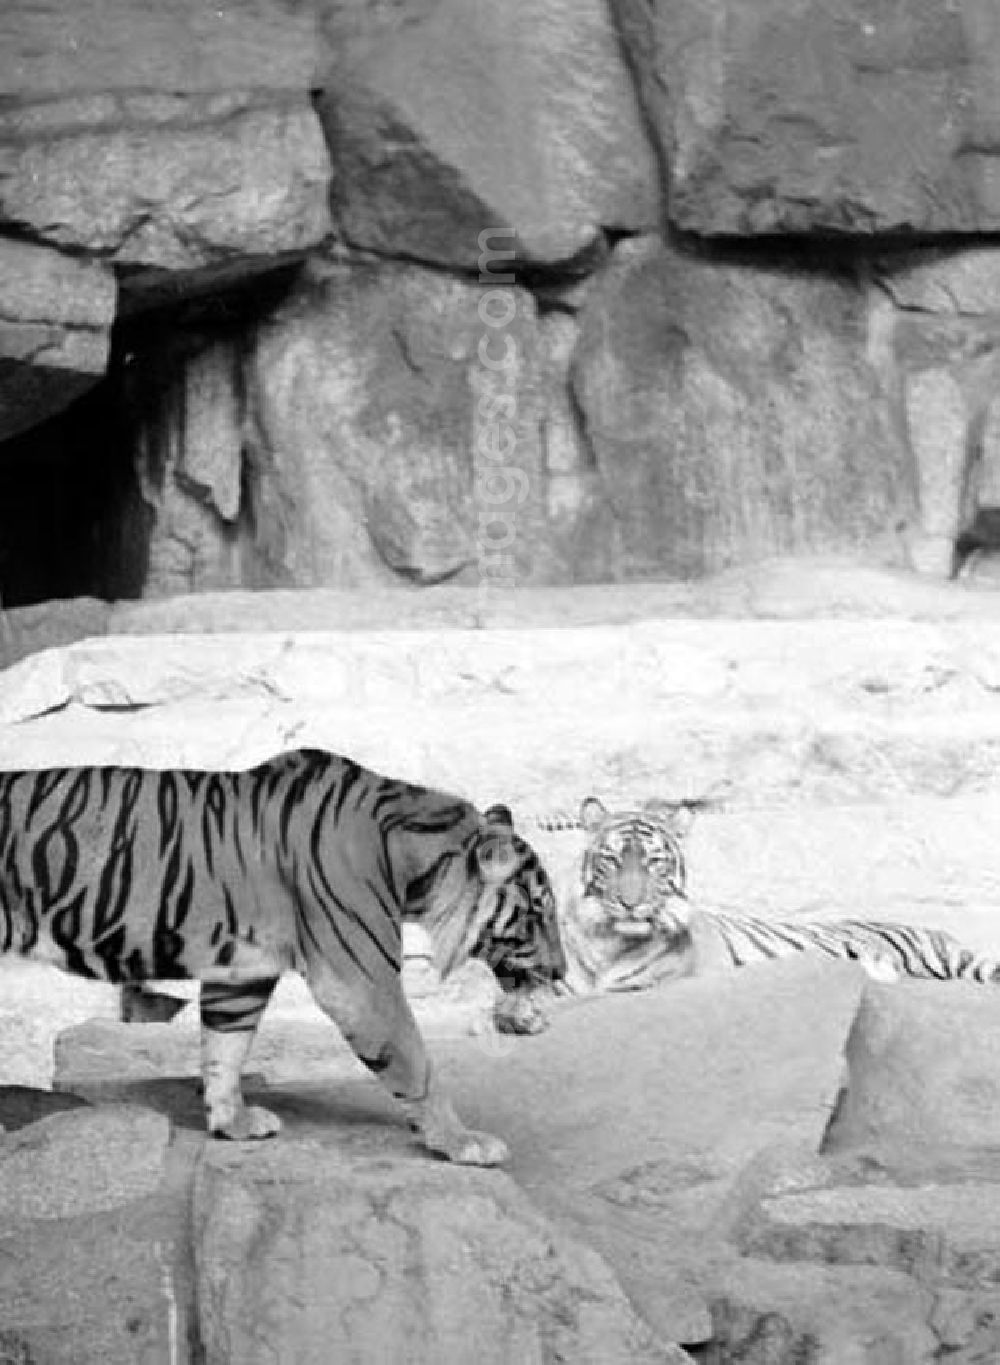 GDR photo archive: Berlin - August 1973 Tiger im Tierpark.